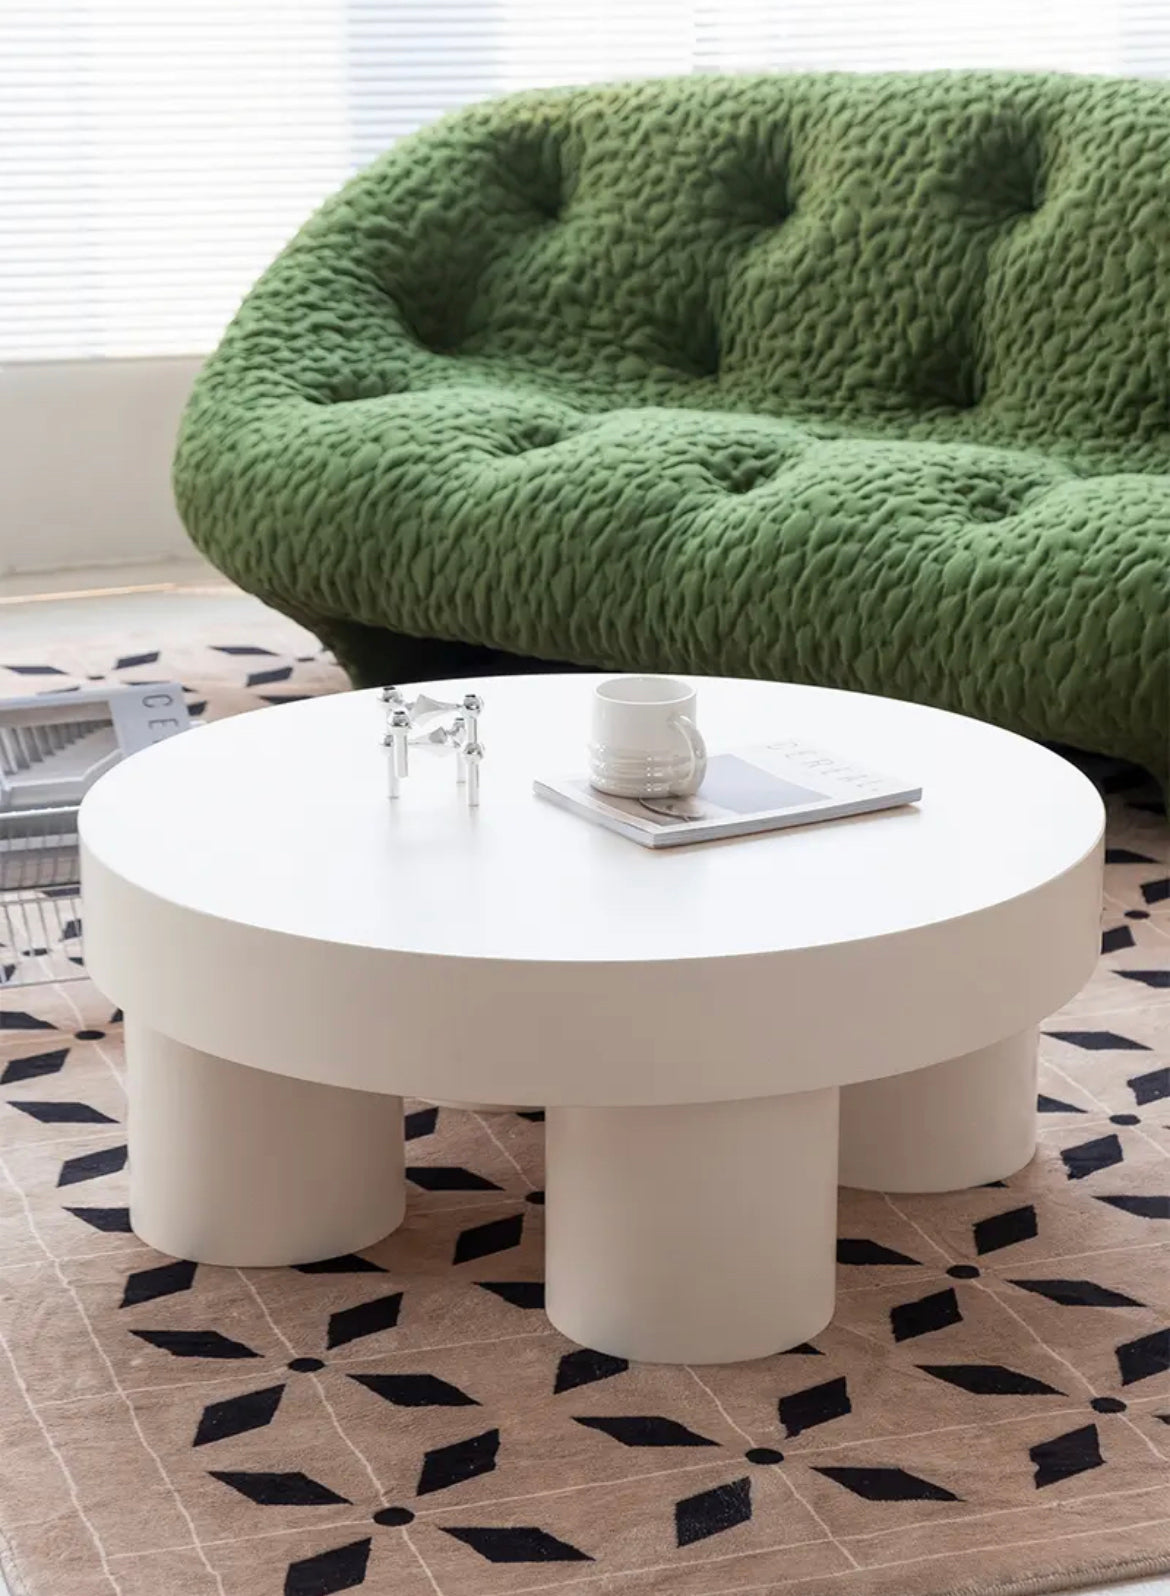 Round Coffee Table Solid Wood Elephant Design Living Room Tea Table